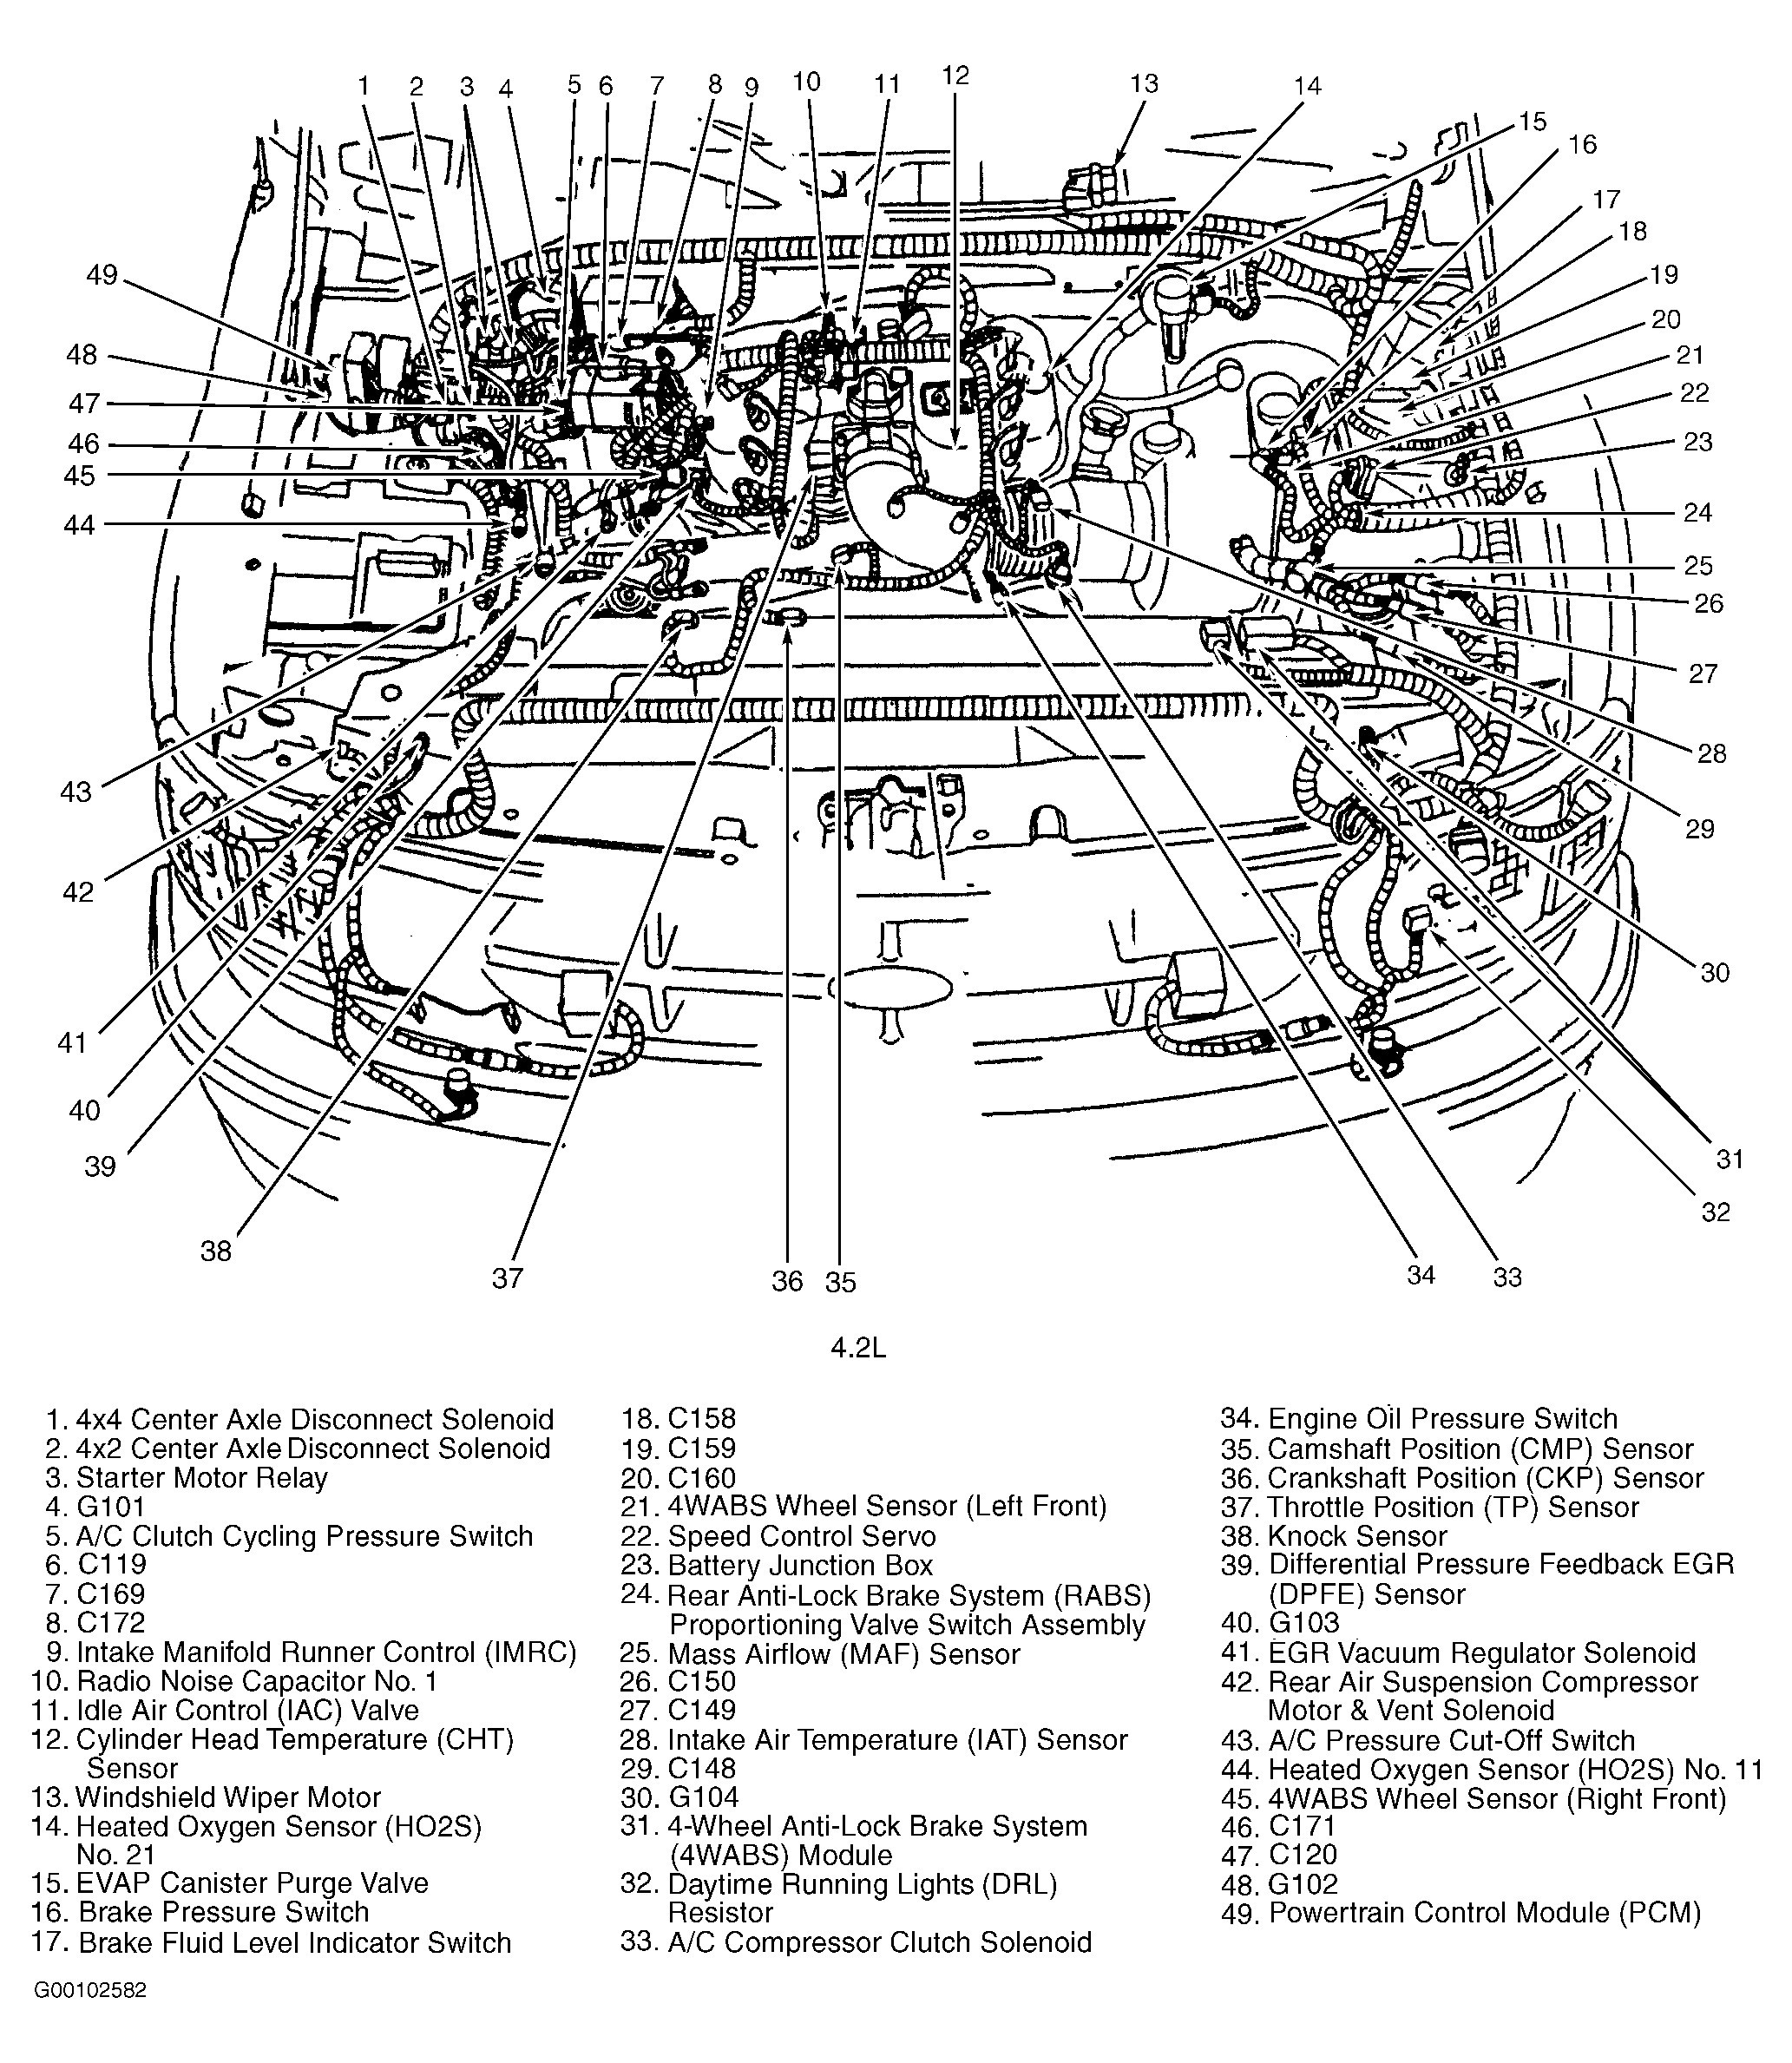 3.0 ford V-6 Engine Wiring Diagram ford Ranger 3 0 Engine Part Diagram Wiring Diagram Of 3.0 ford V-6 Engine Wiring Diagram